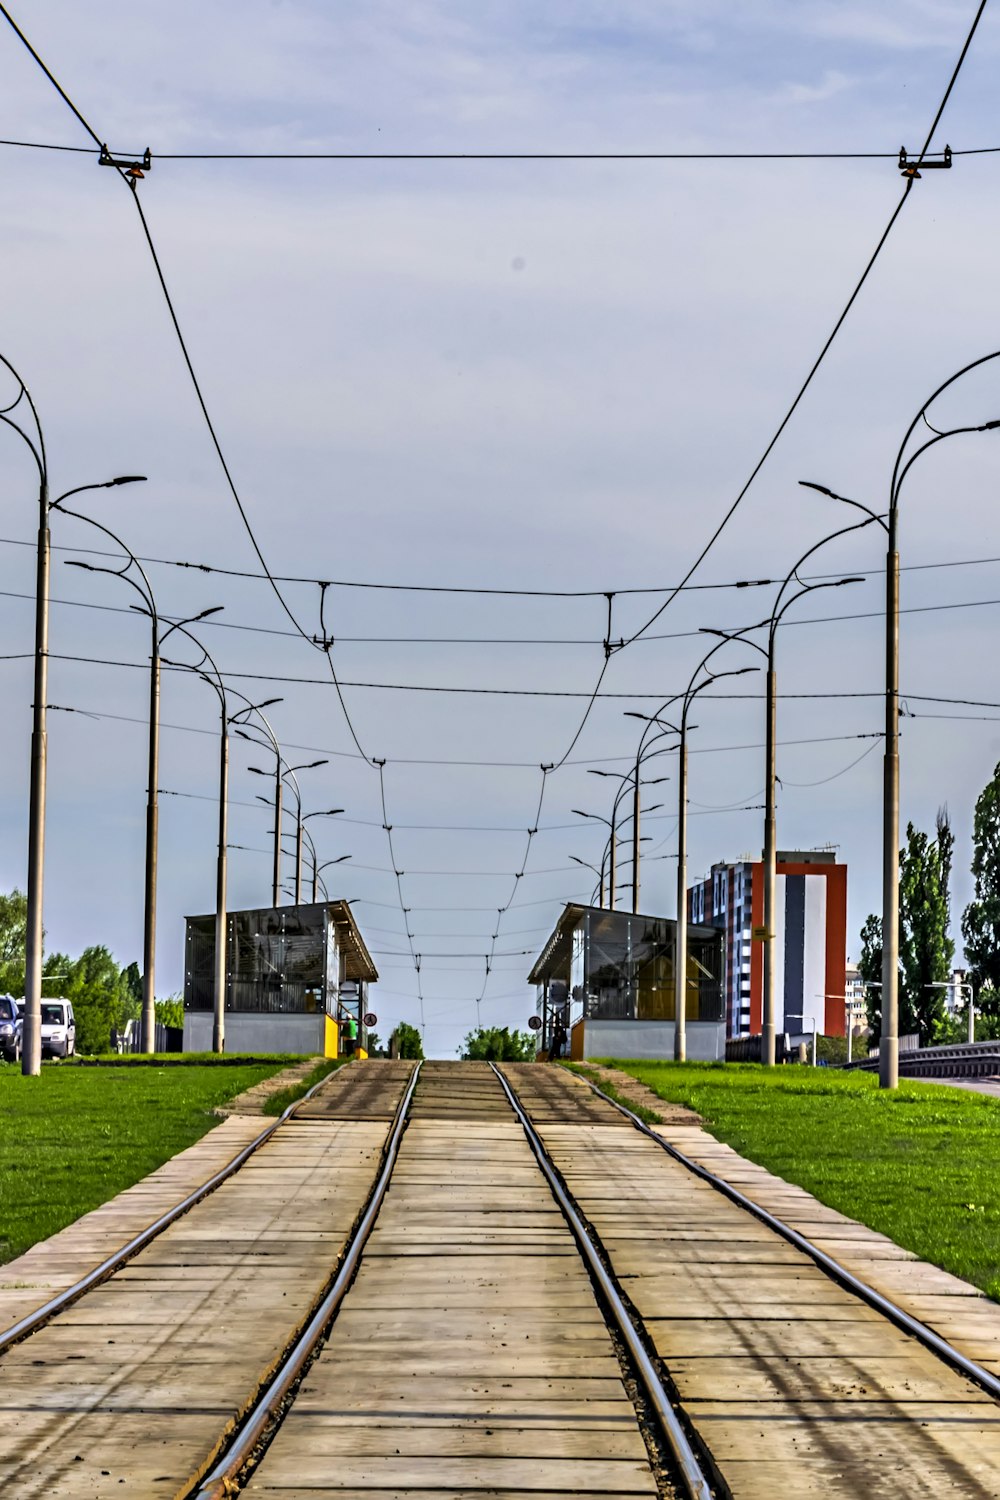 a train track running through a grassy area